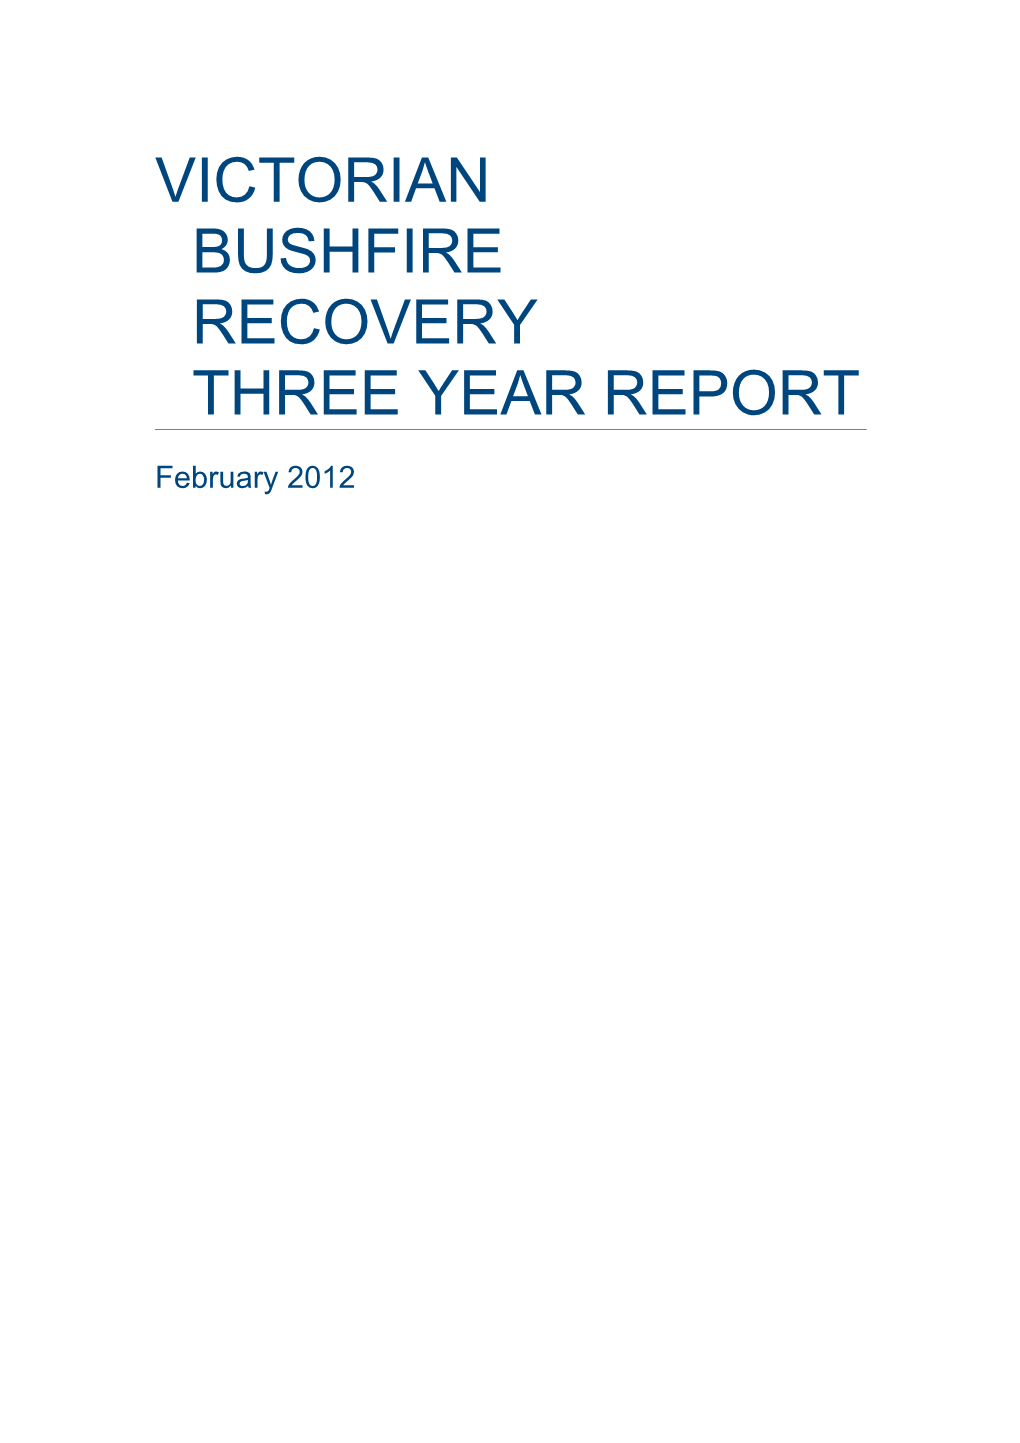 VICTORIAN BUSHFIRE RECOVERY THREE YEAR REPORT February 2012